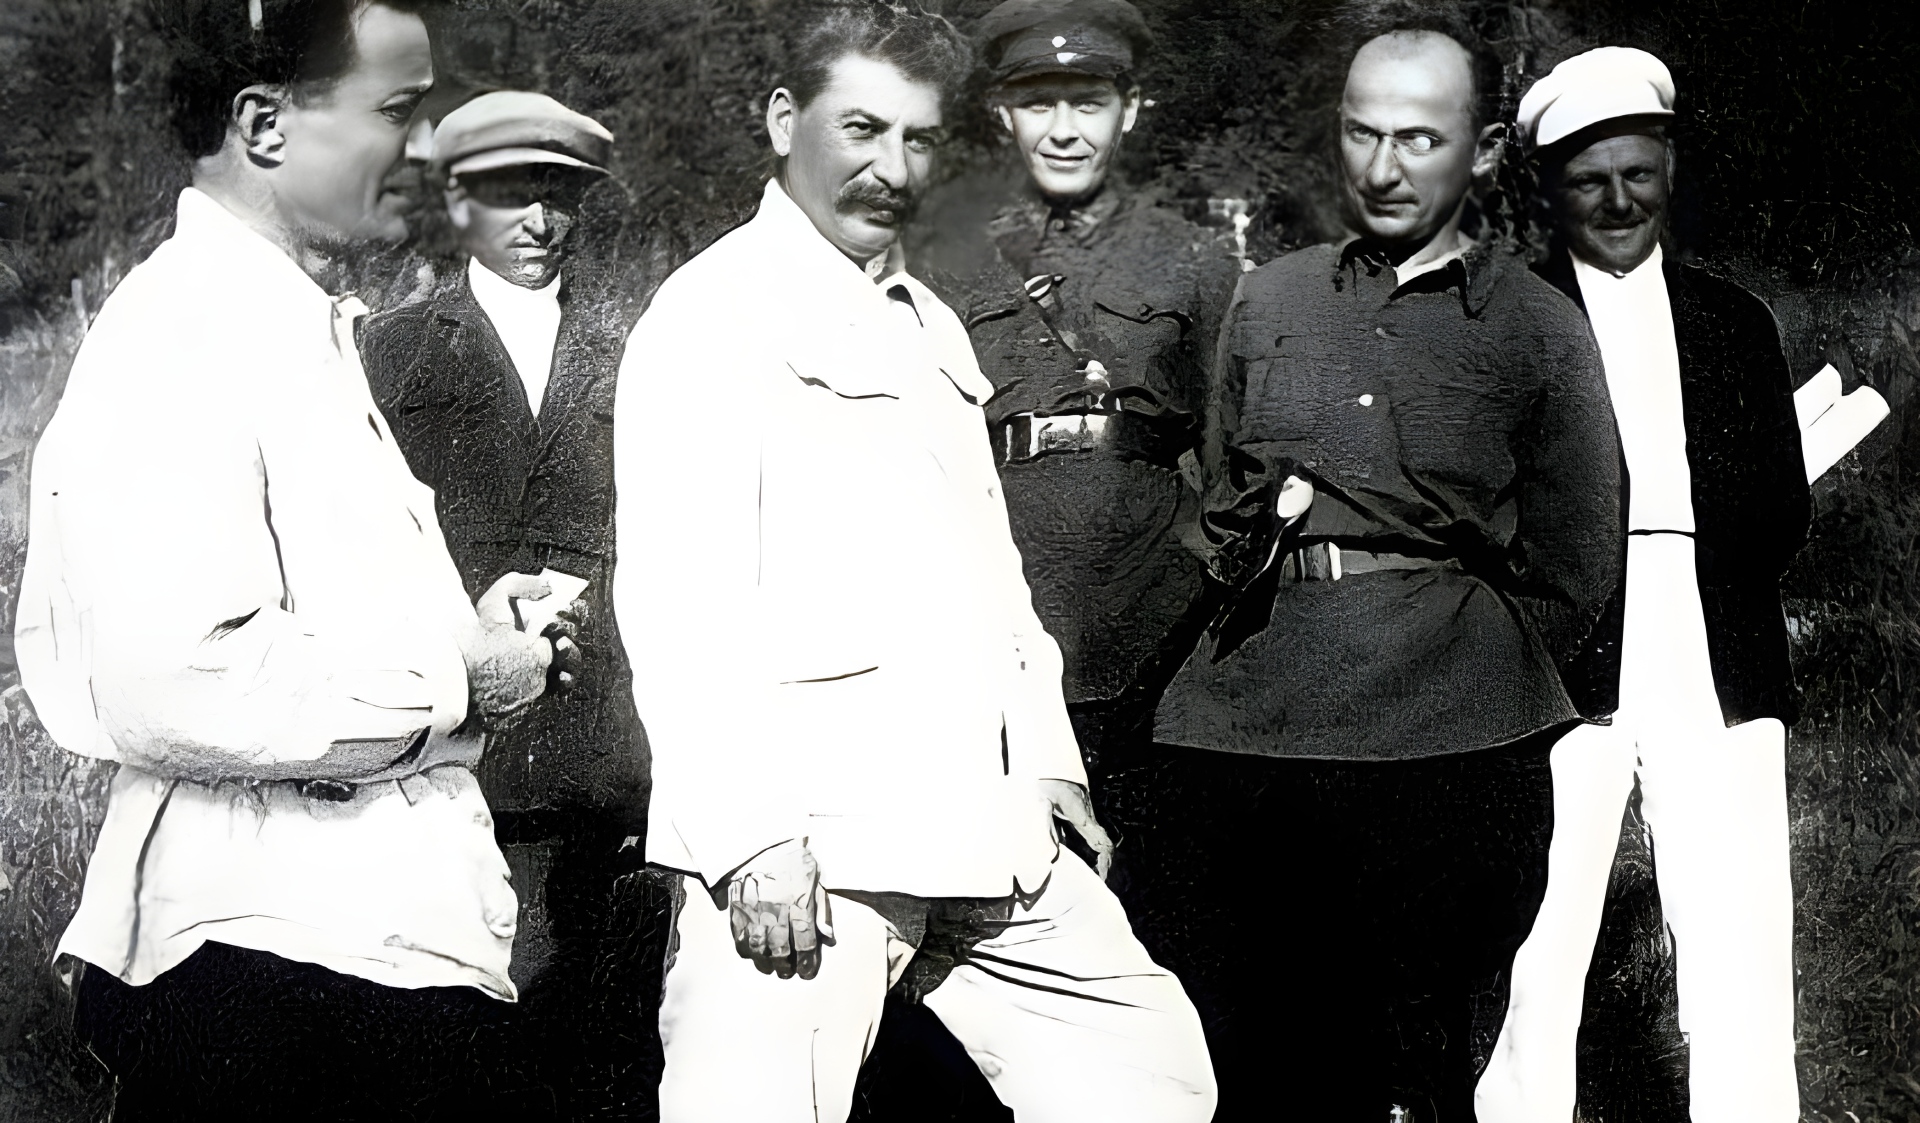 Stalin - Beria Terror in Abkhazia